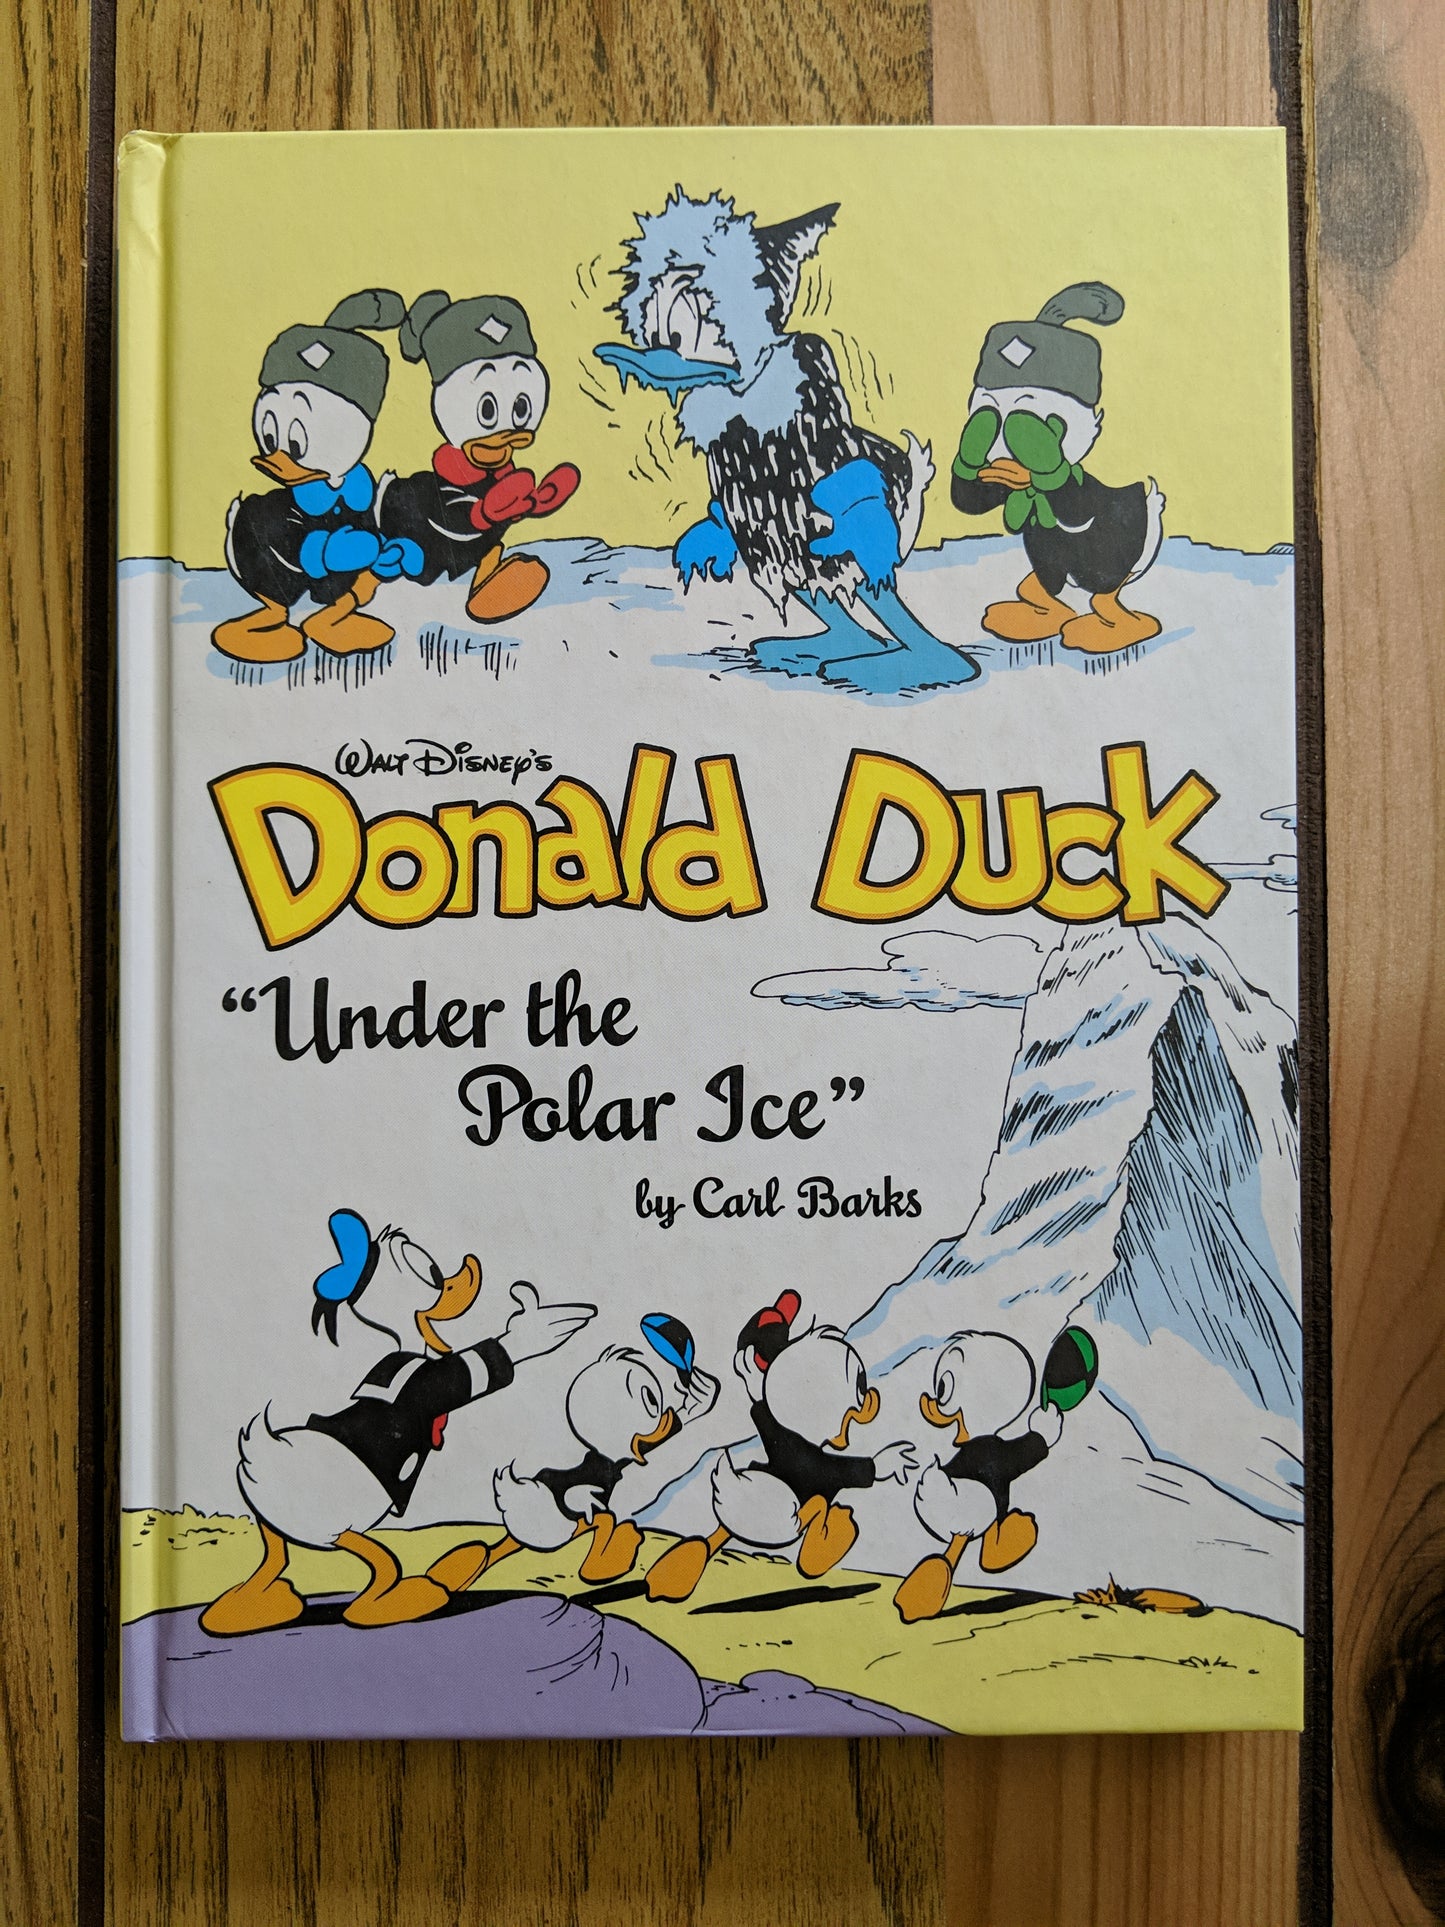 Donald Duck: "Under the Polar Ice"